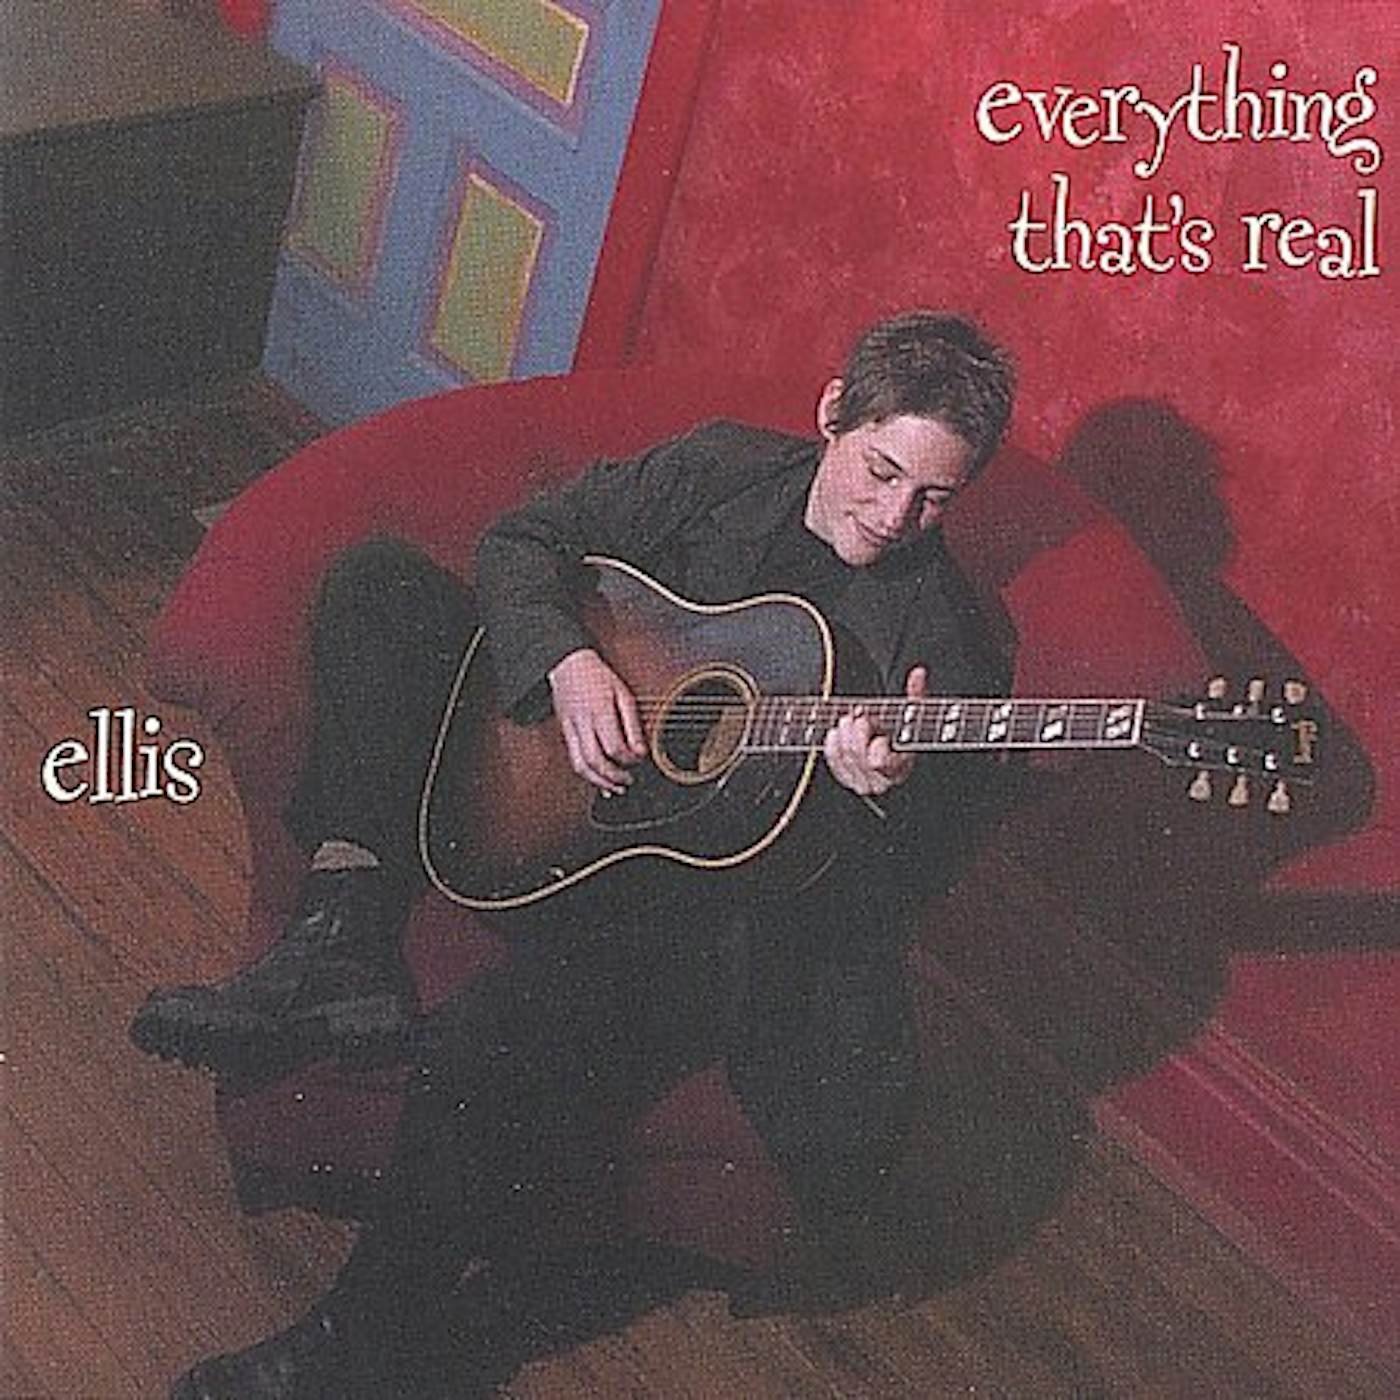 ellis EVERYTHING THATS REAL CD